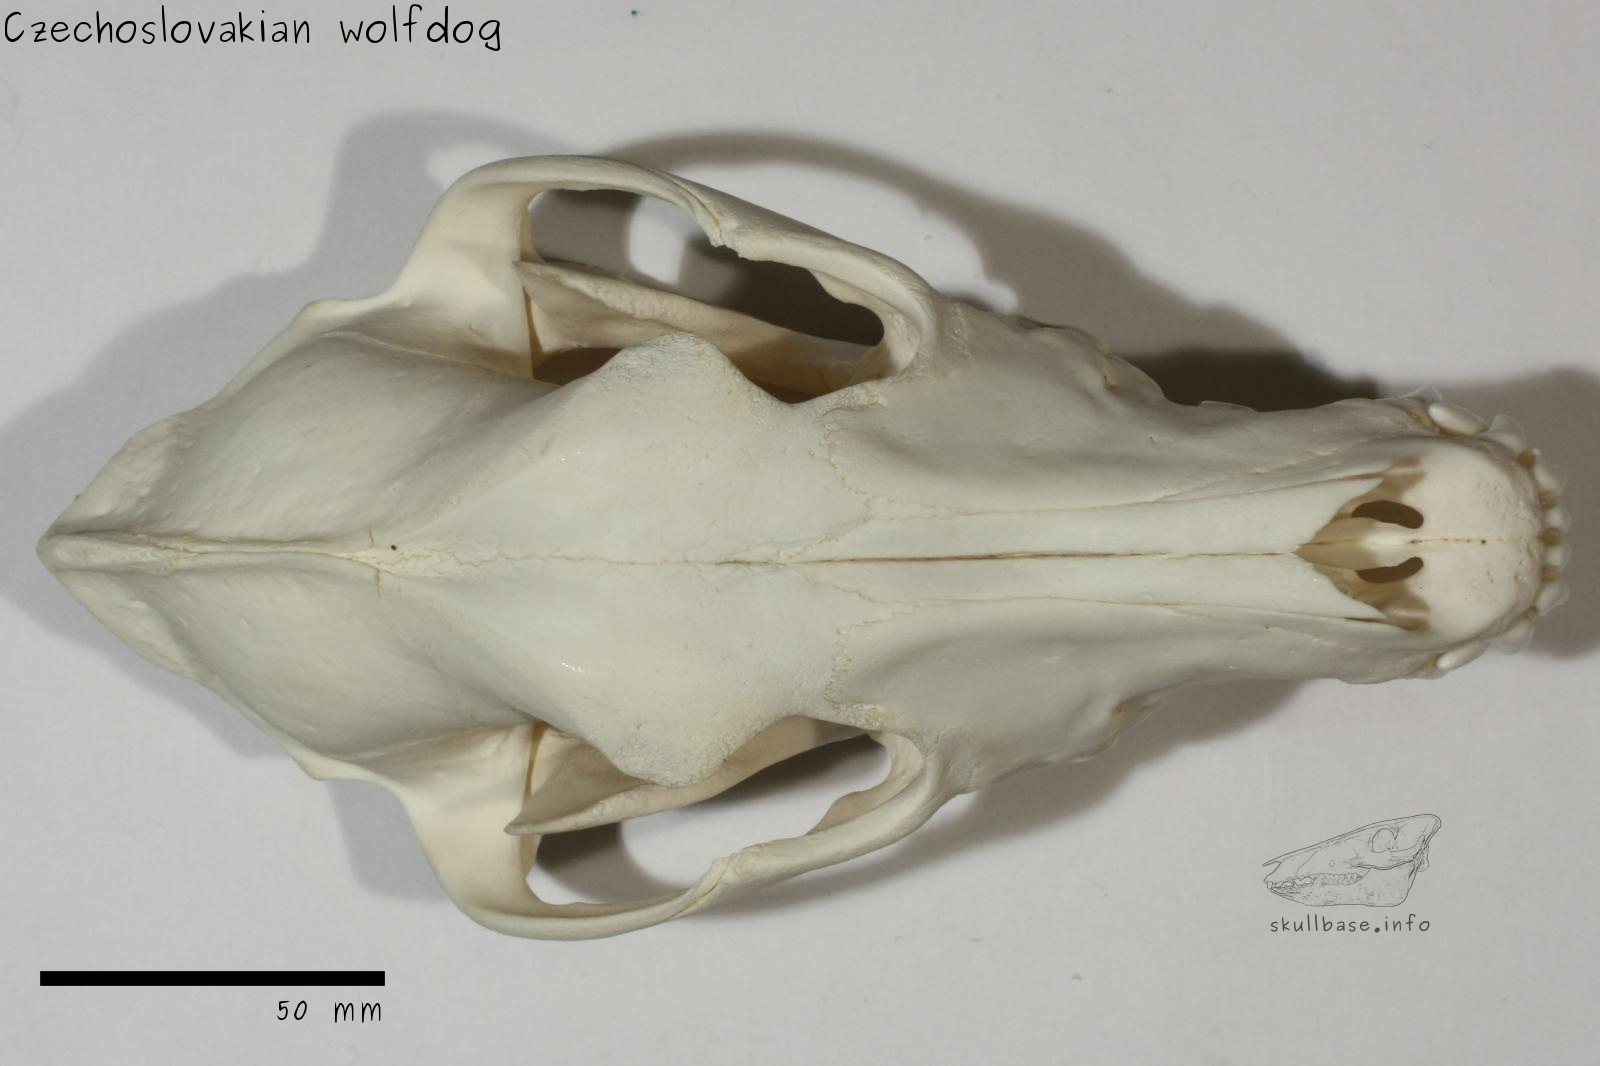 Czechoslovakian wolfdog (Canis lupus familiaris) skull dorsal view